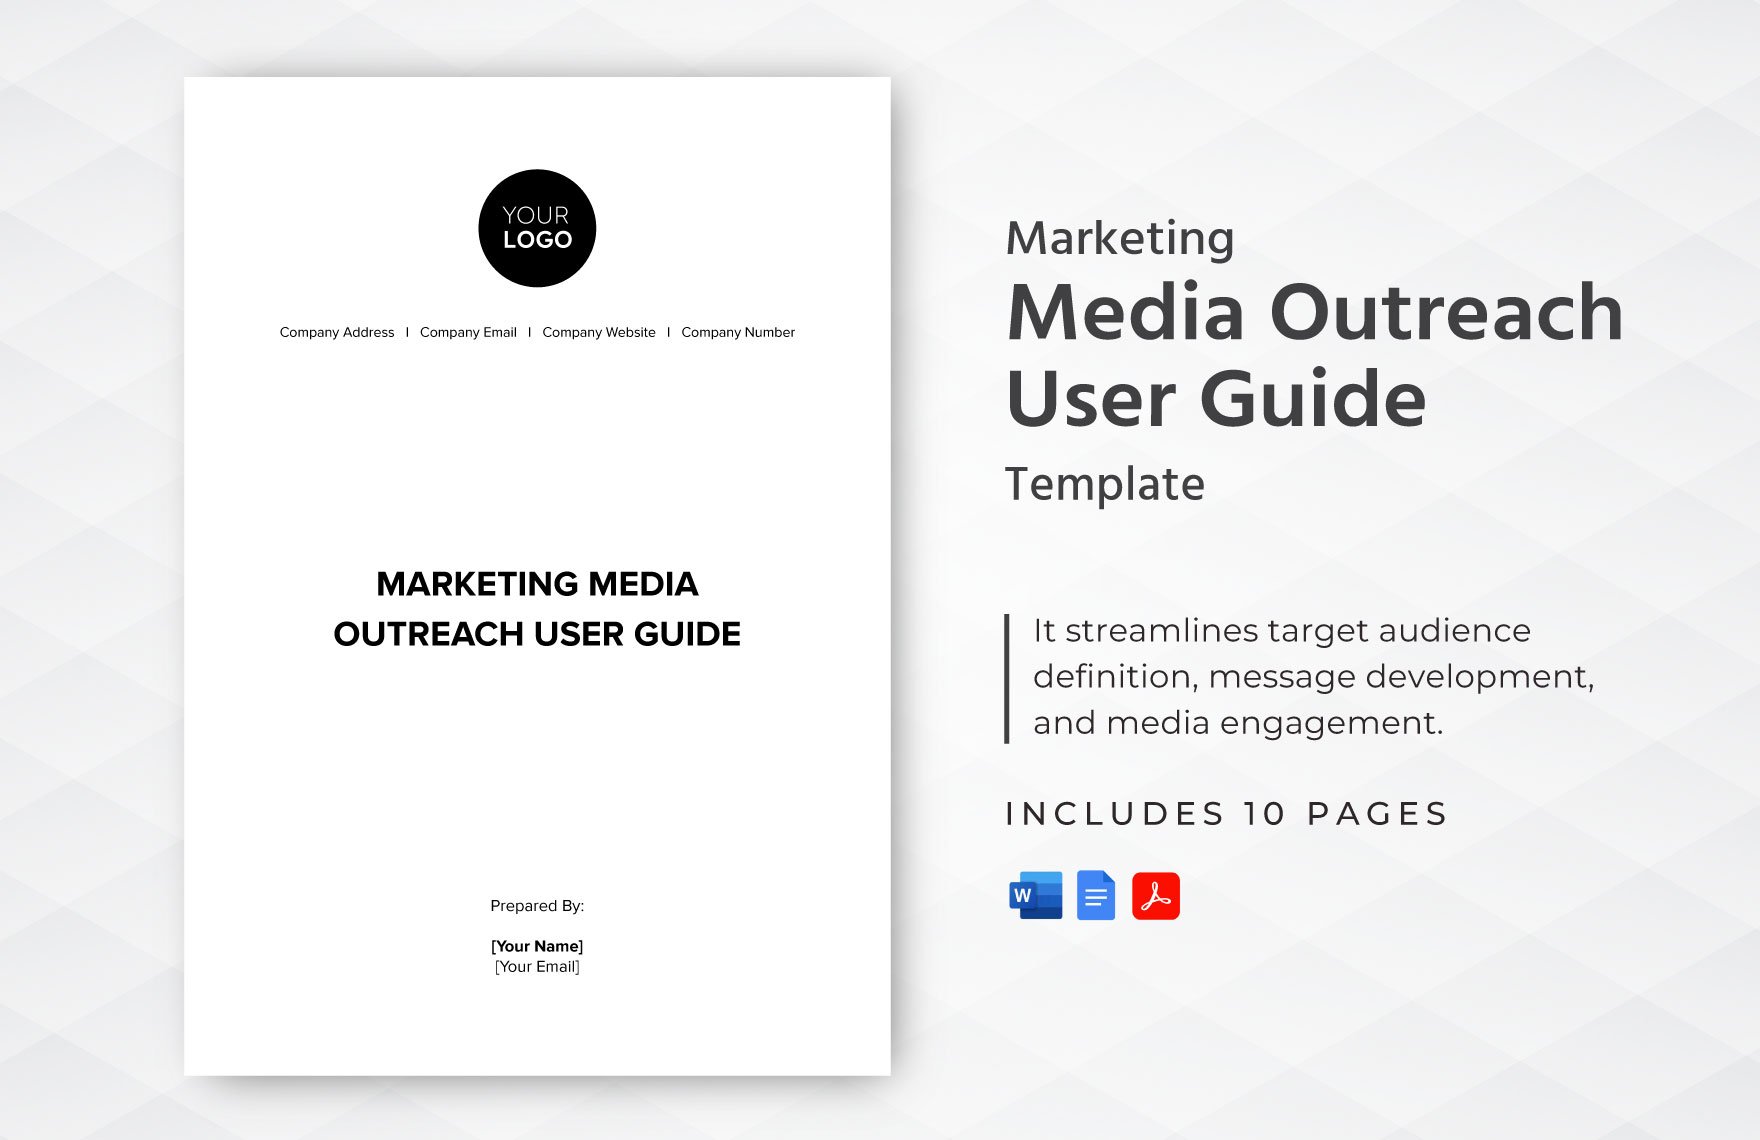 Marketing Media Outreach User Guide Template